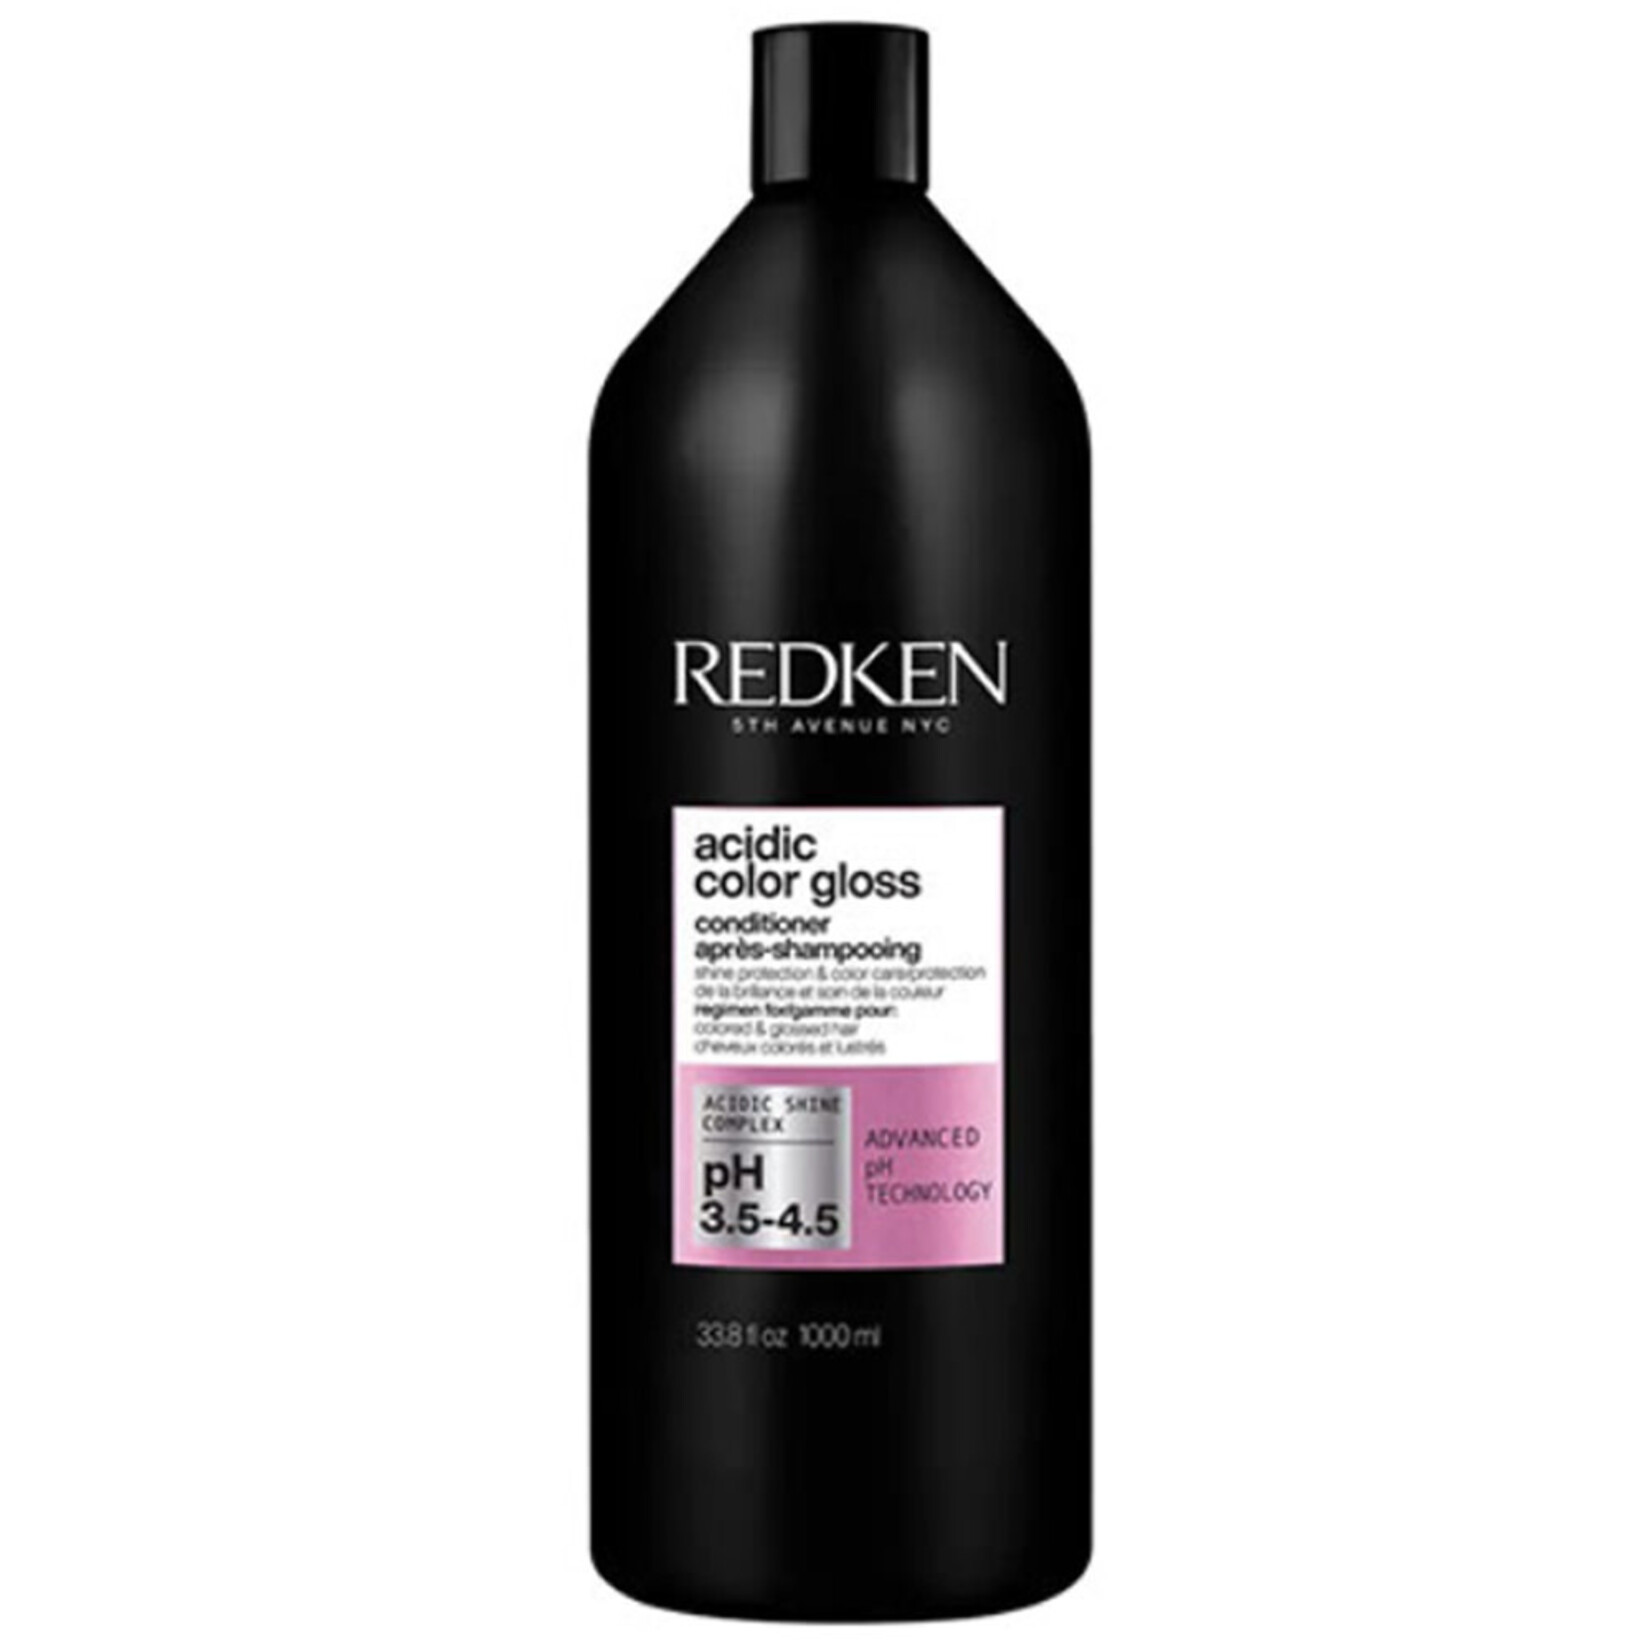 Redken Redken - Acidic color gloss - Revitalisant 1 litre